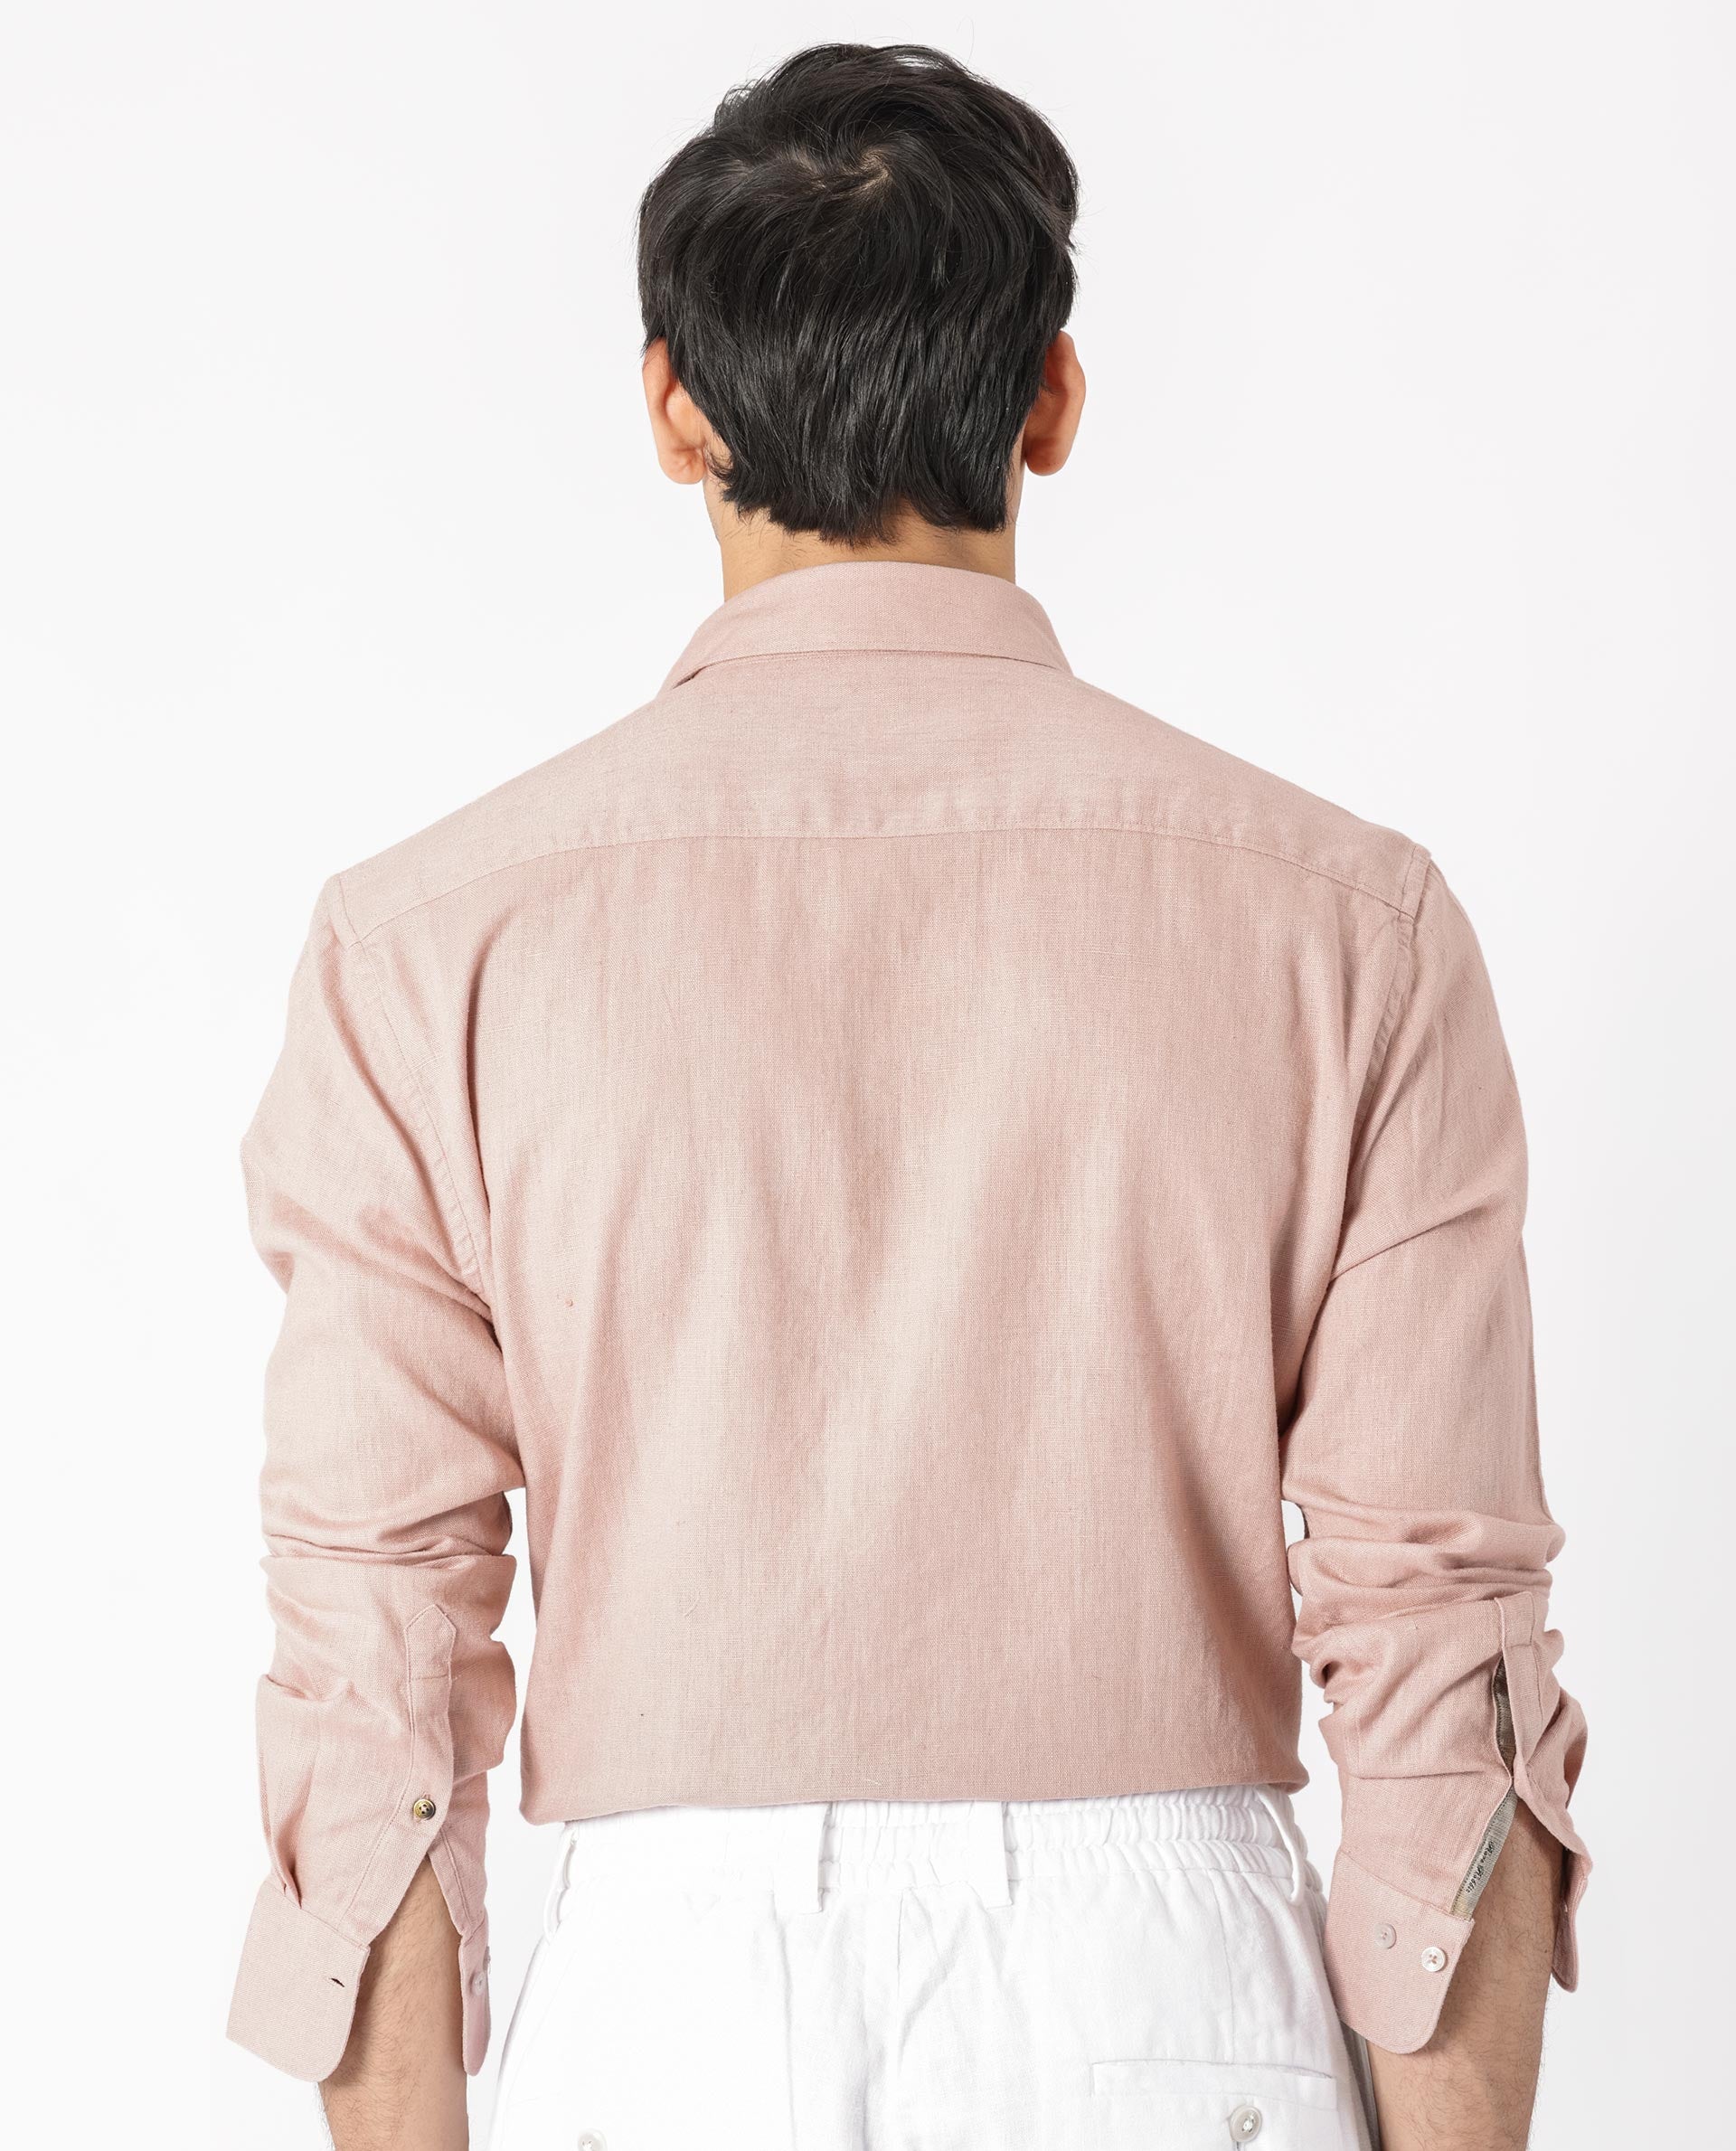 Rare Rabbit Men's Lunet Beige Linen Full Sleeves Solid Shirt